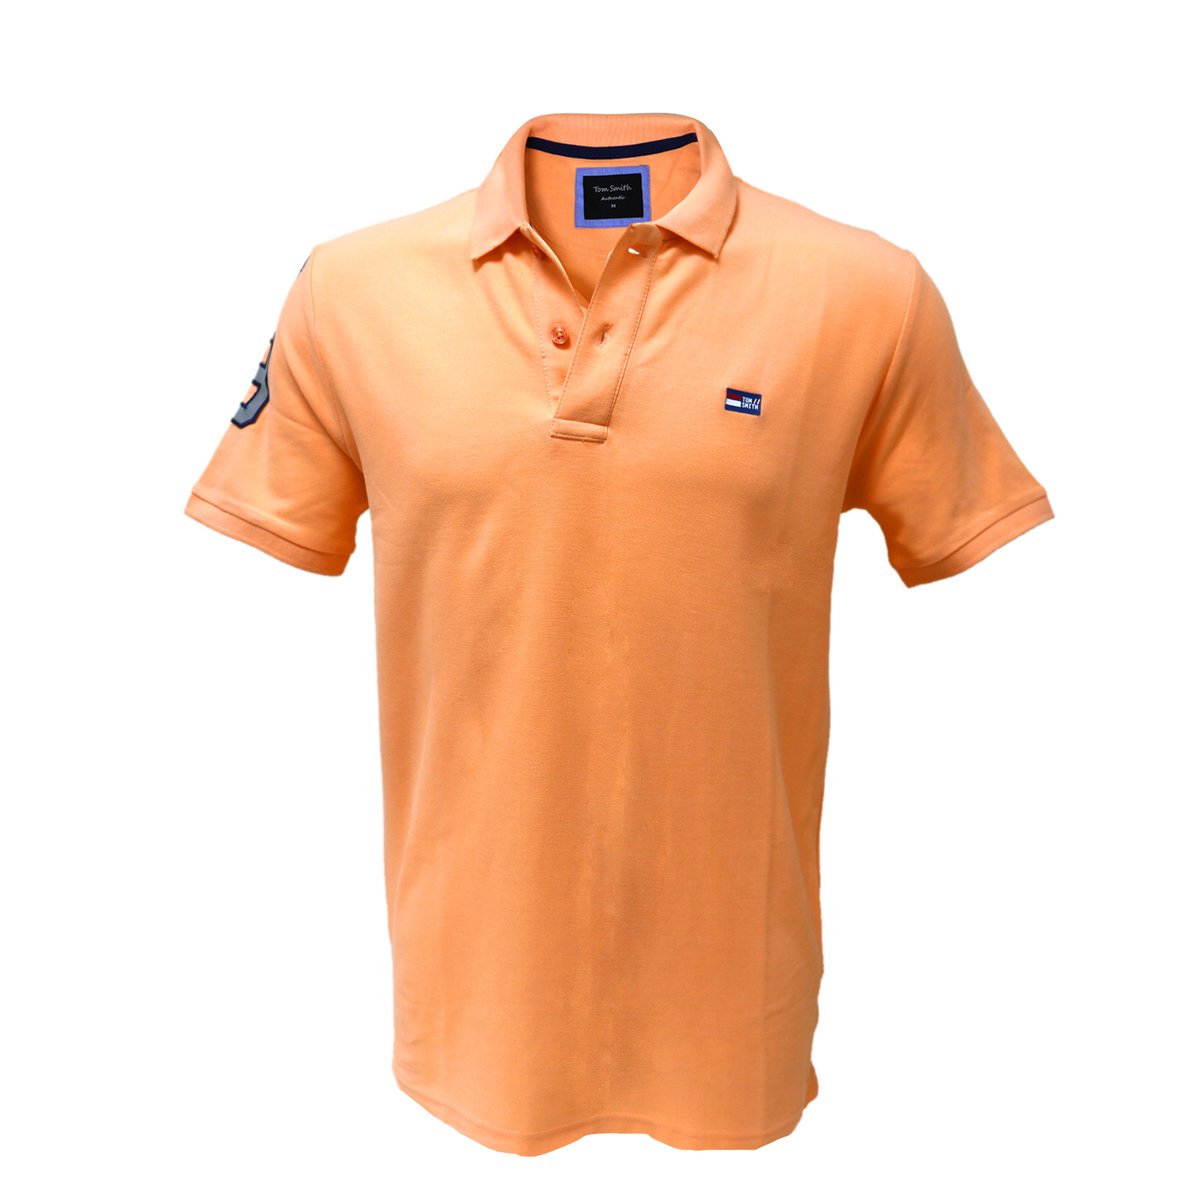 Tom Smith Polo T-Shirt Peach Nectar - L